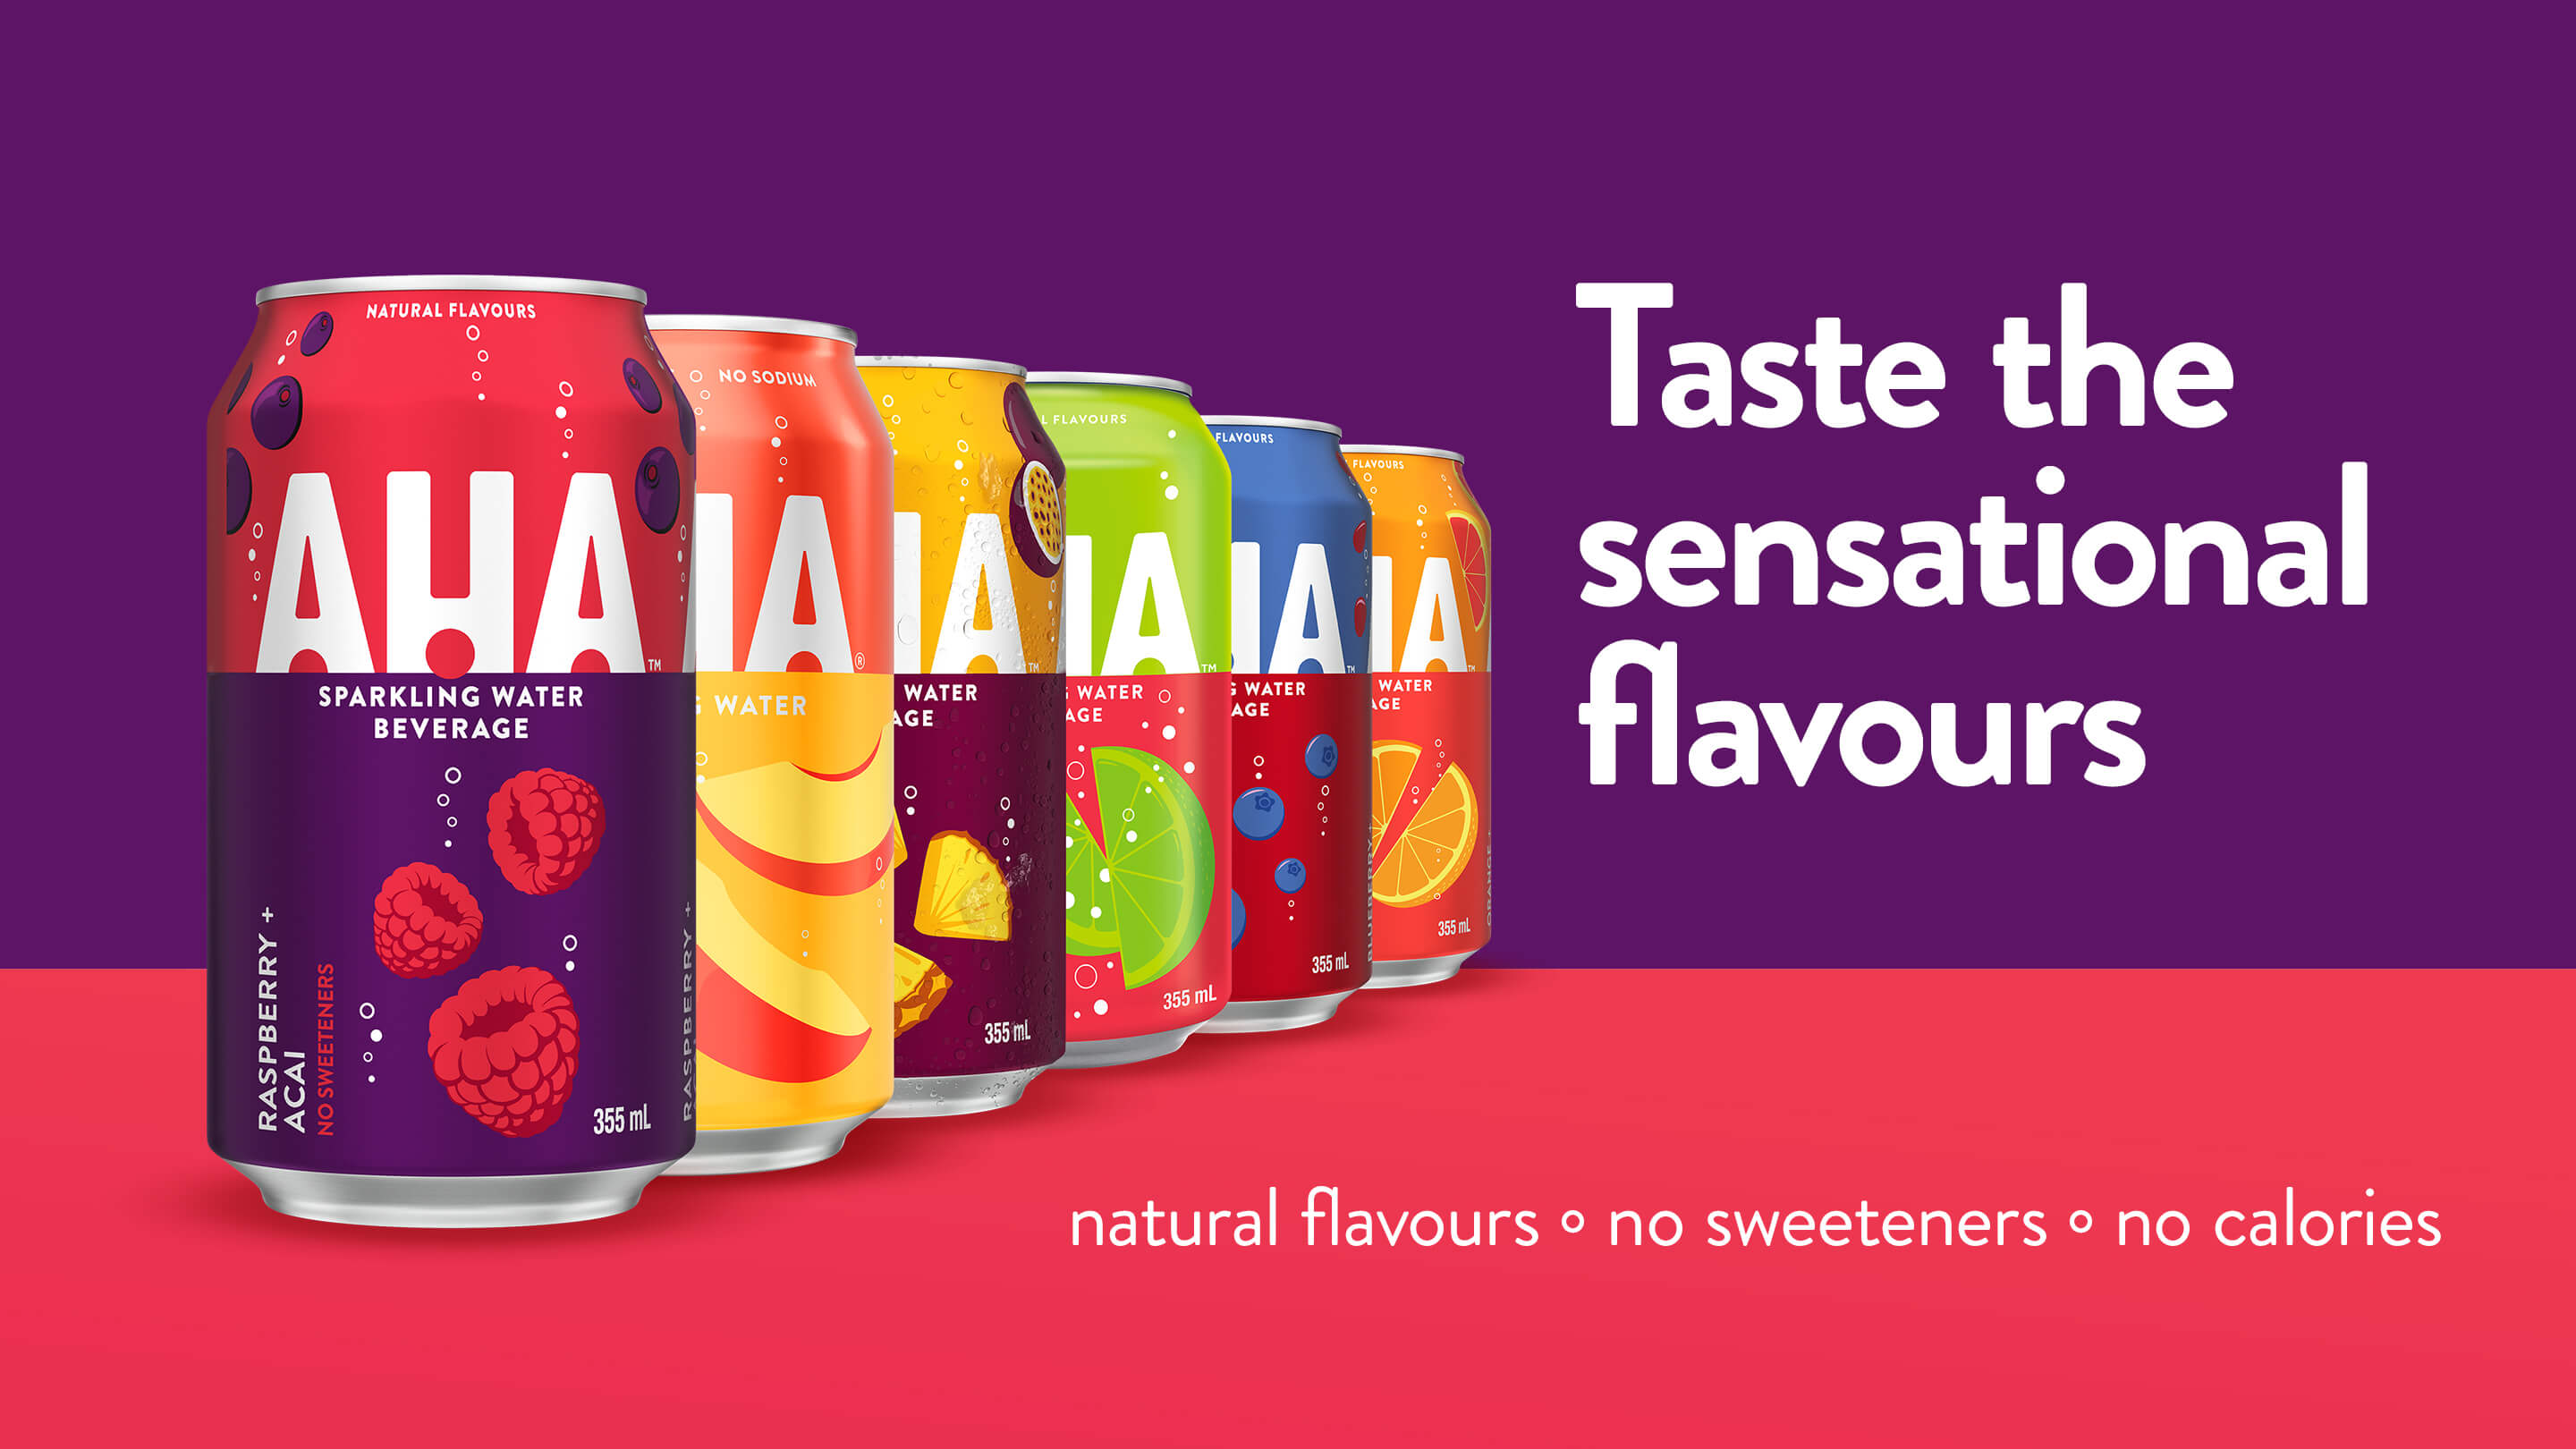 AHA. Taste the sensational flavours. natural flavours. no sweeteners. no calories.